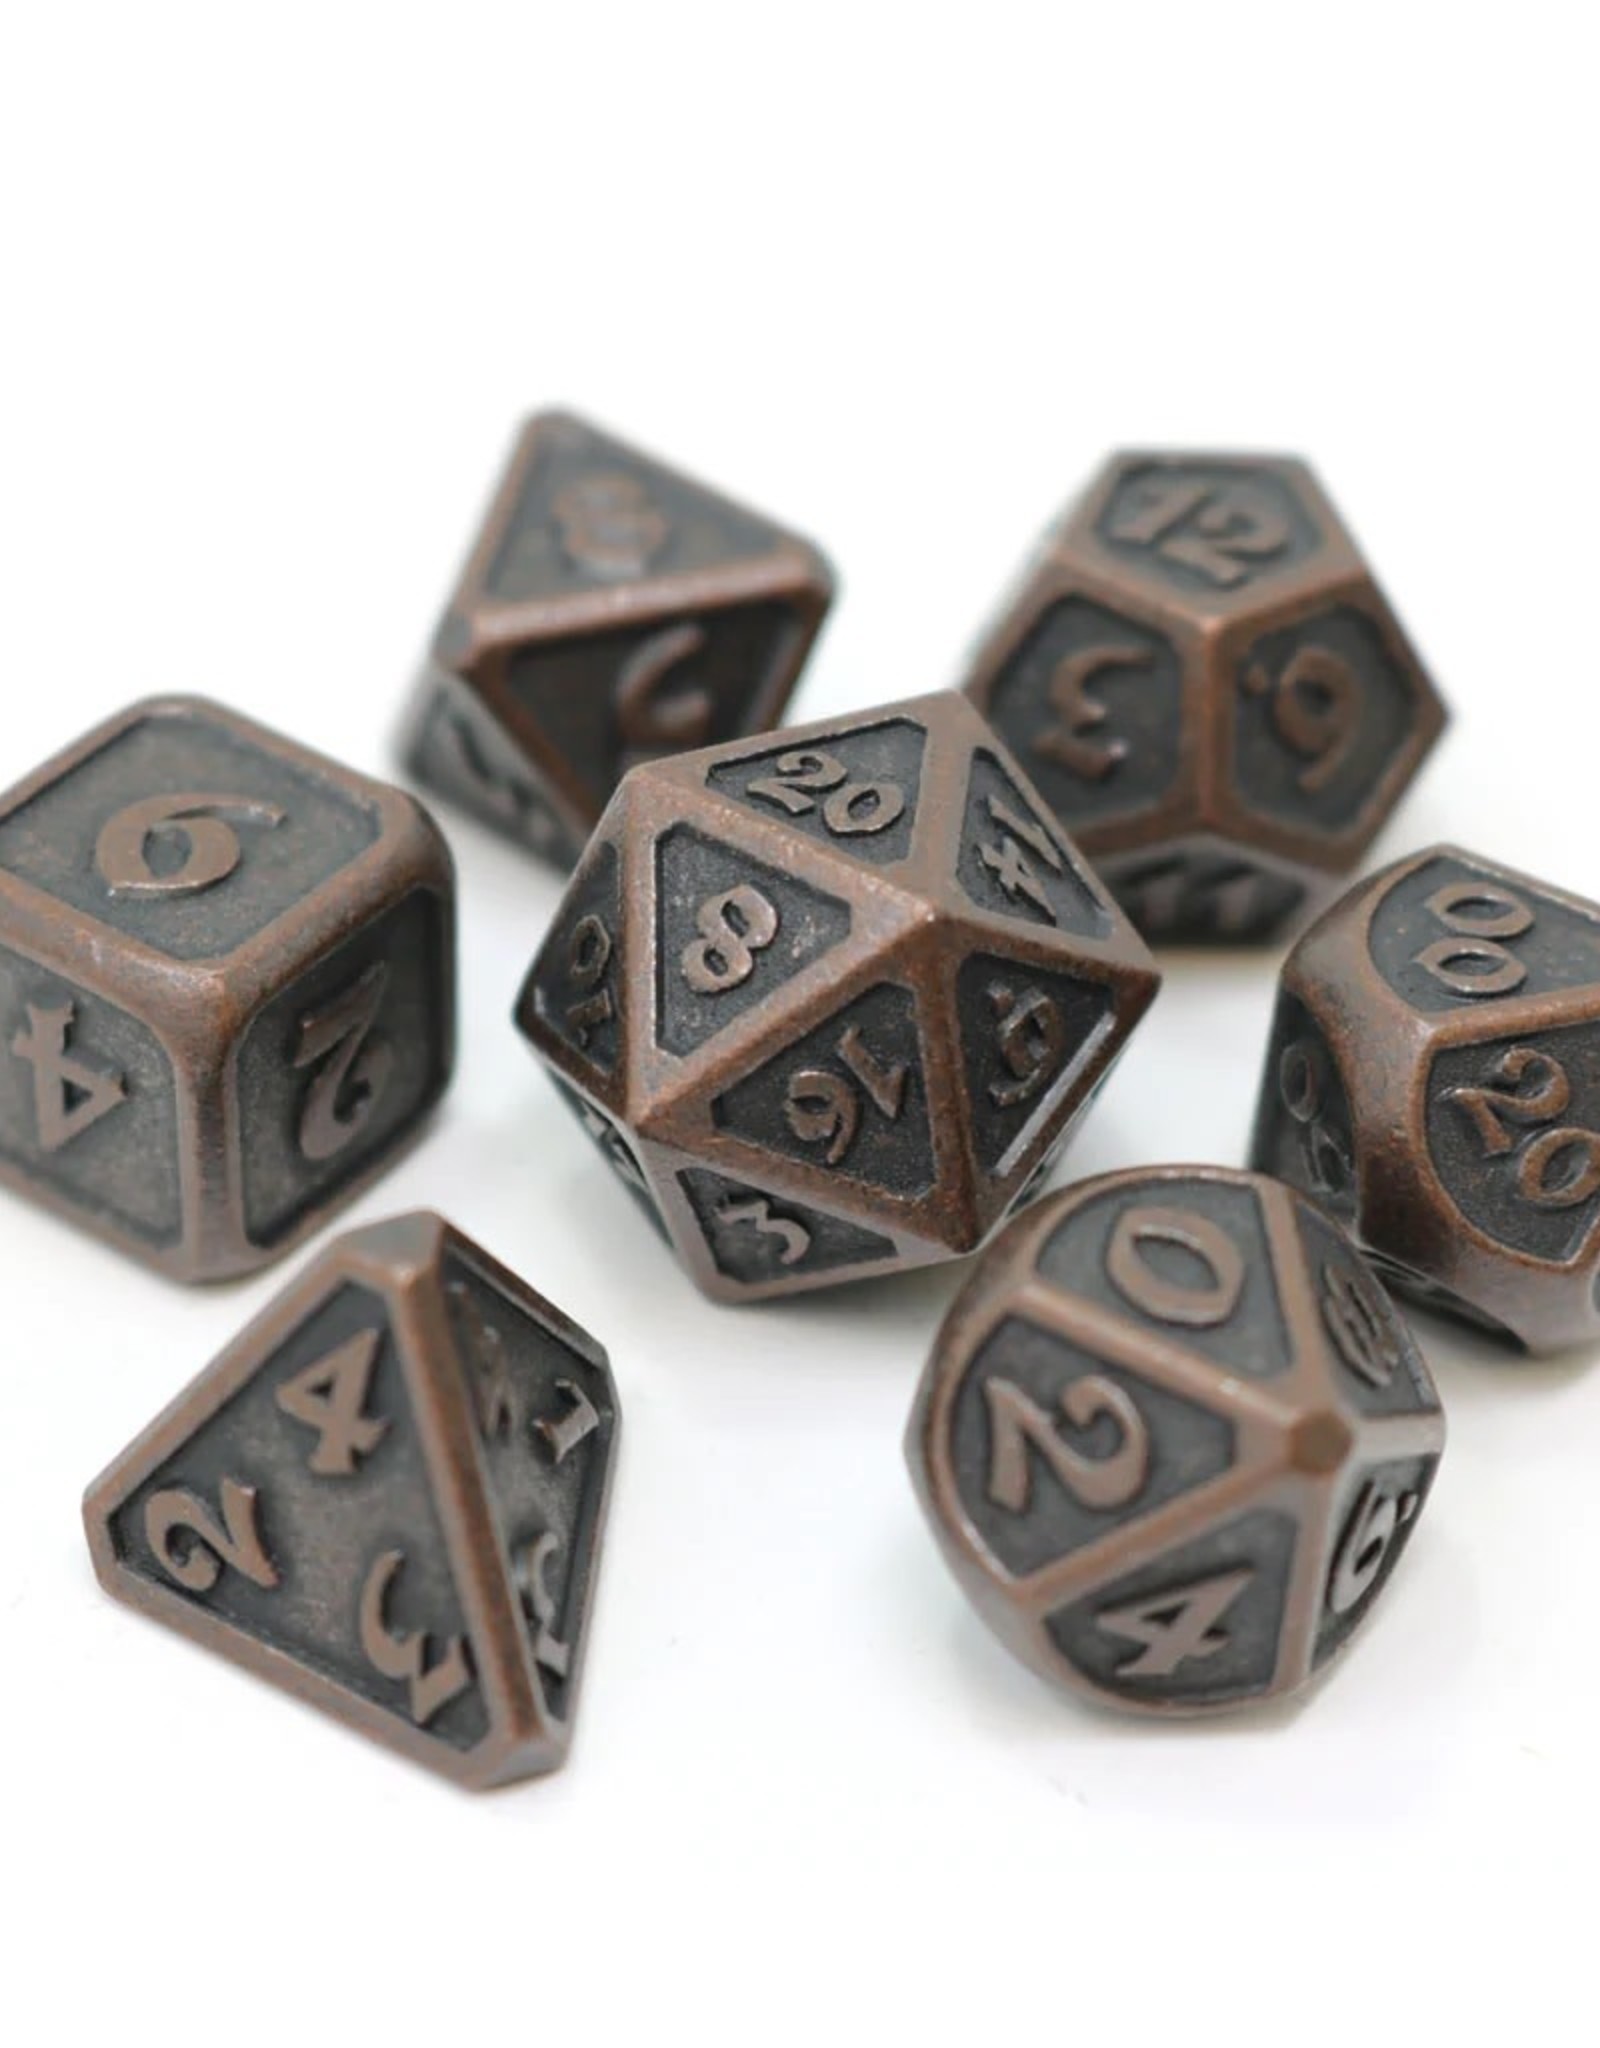 Die Hard 7PC RPG Set: Mythica Dark Copper Metal Polyhedral